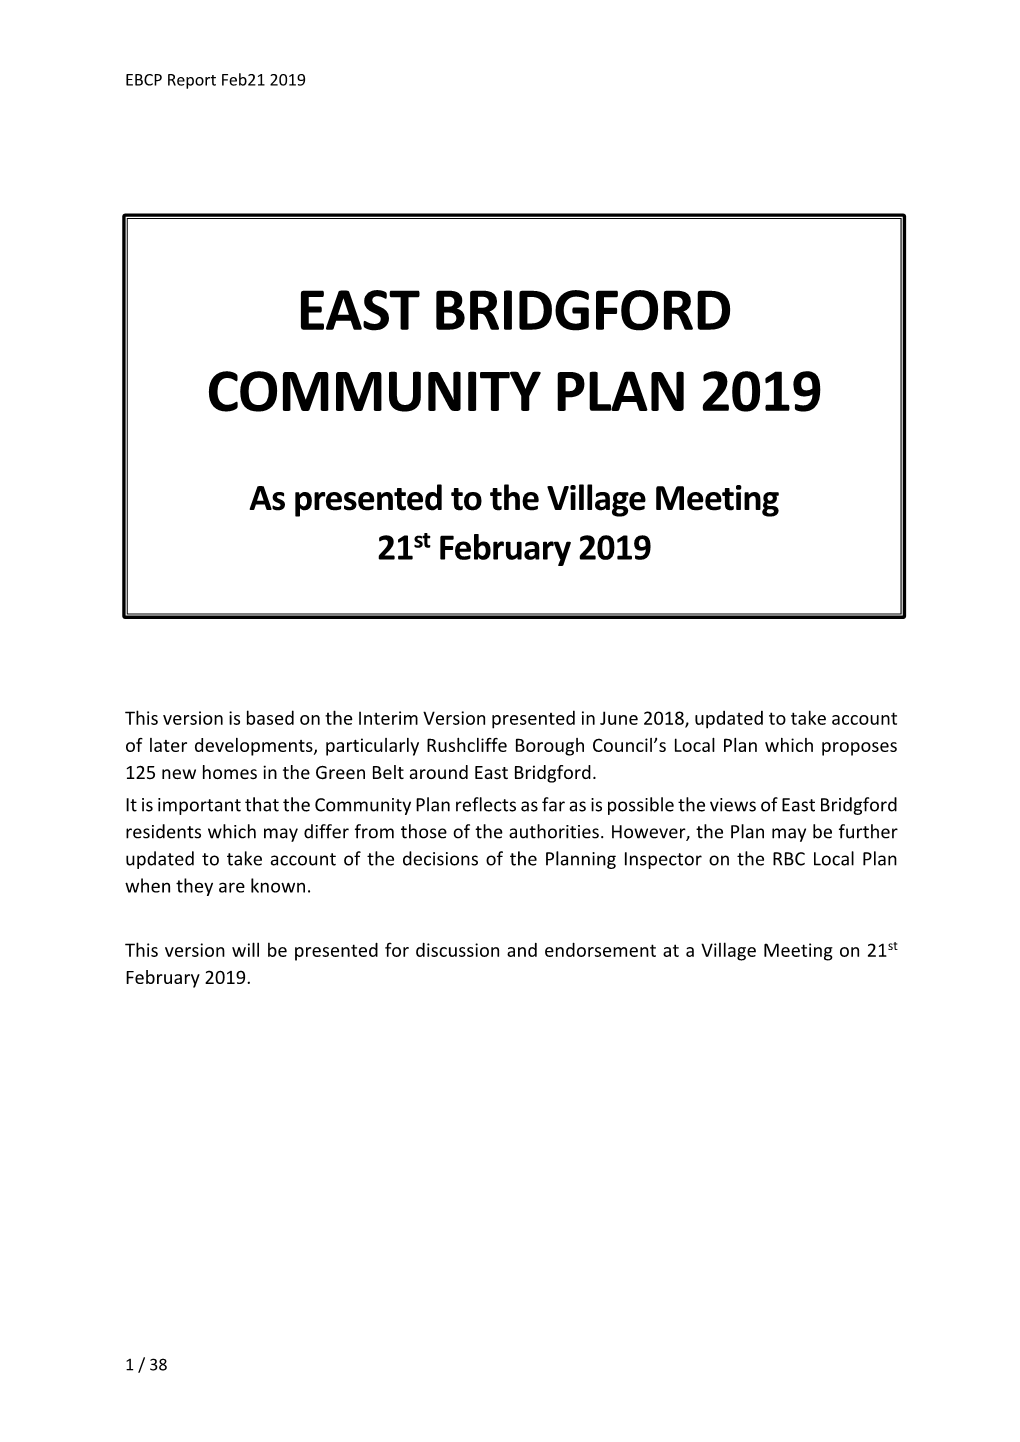 THE EAST BRIDGFORD COMMUNITY PLAN 2019.Pdf